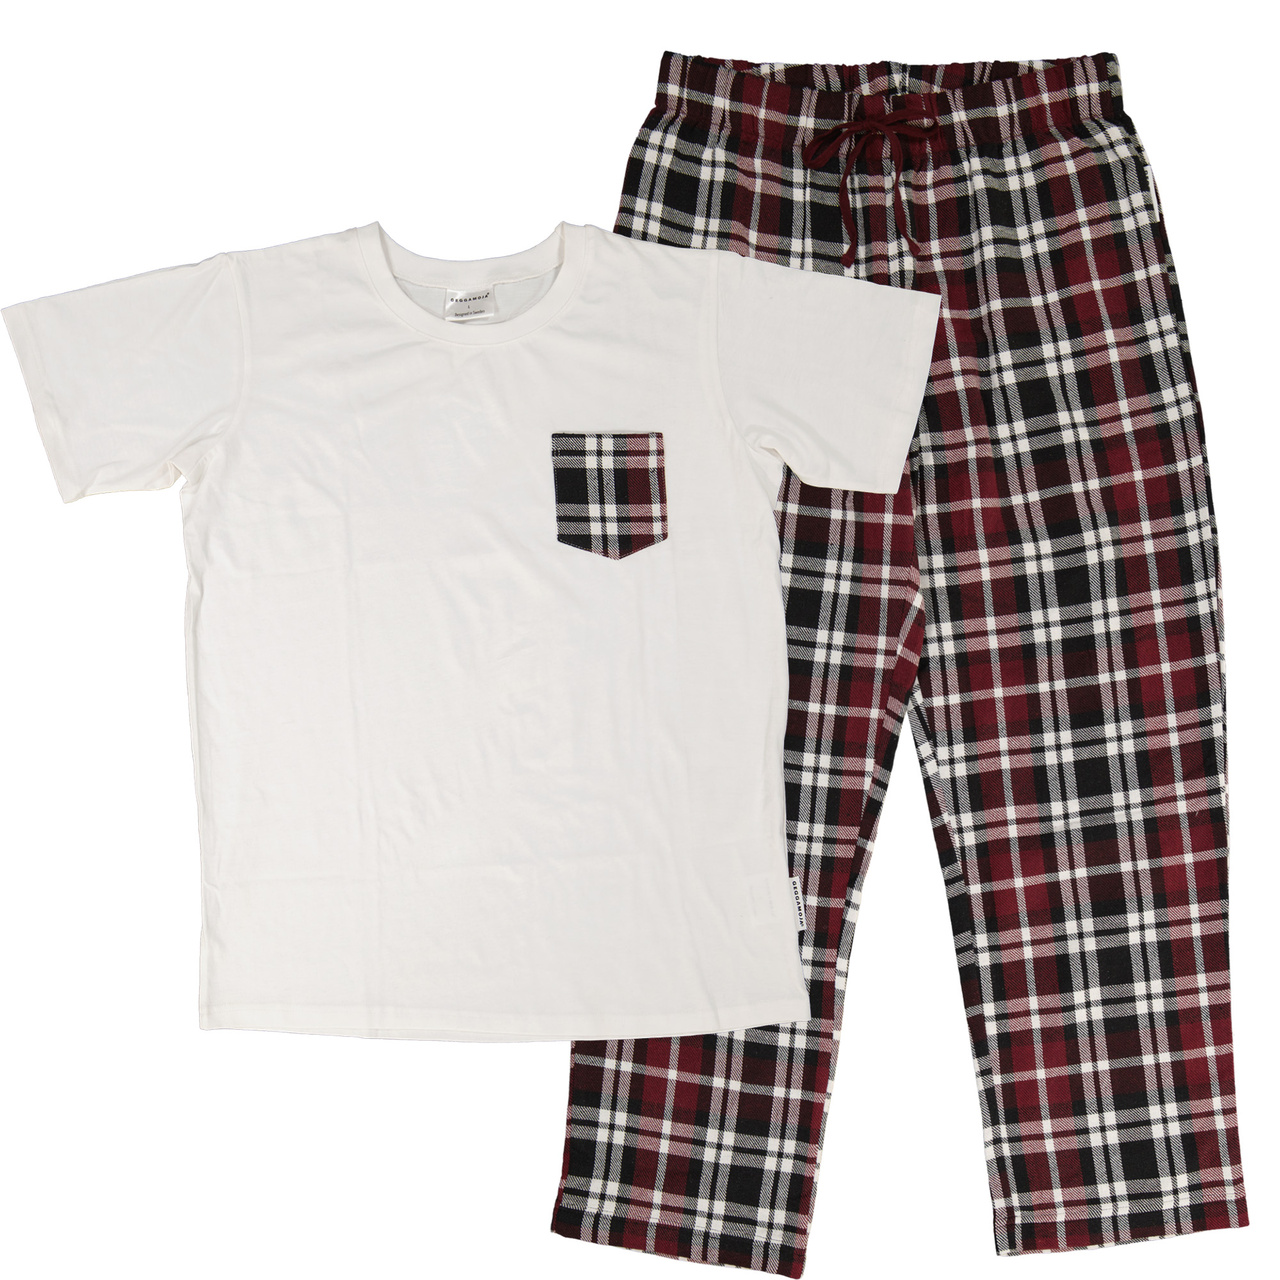 Flannel twp piece pyjamas adult Burgundy check XL